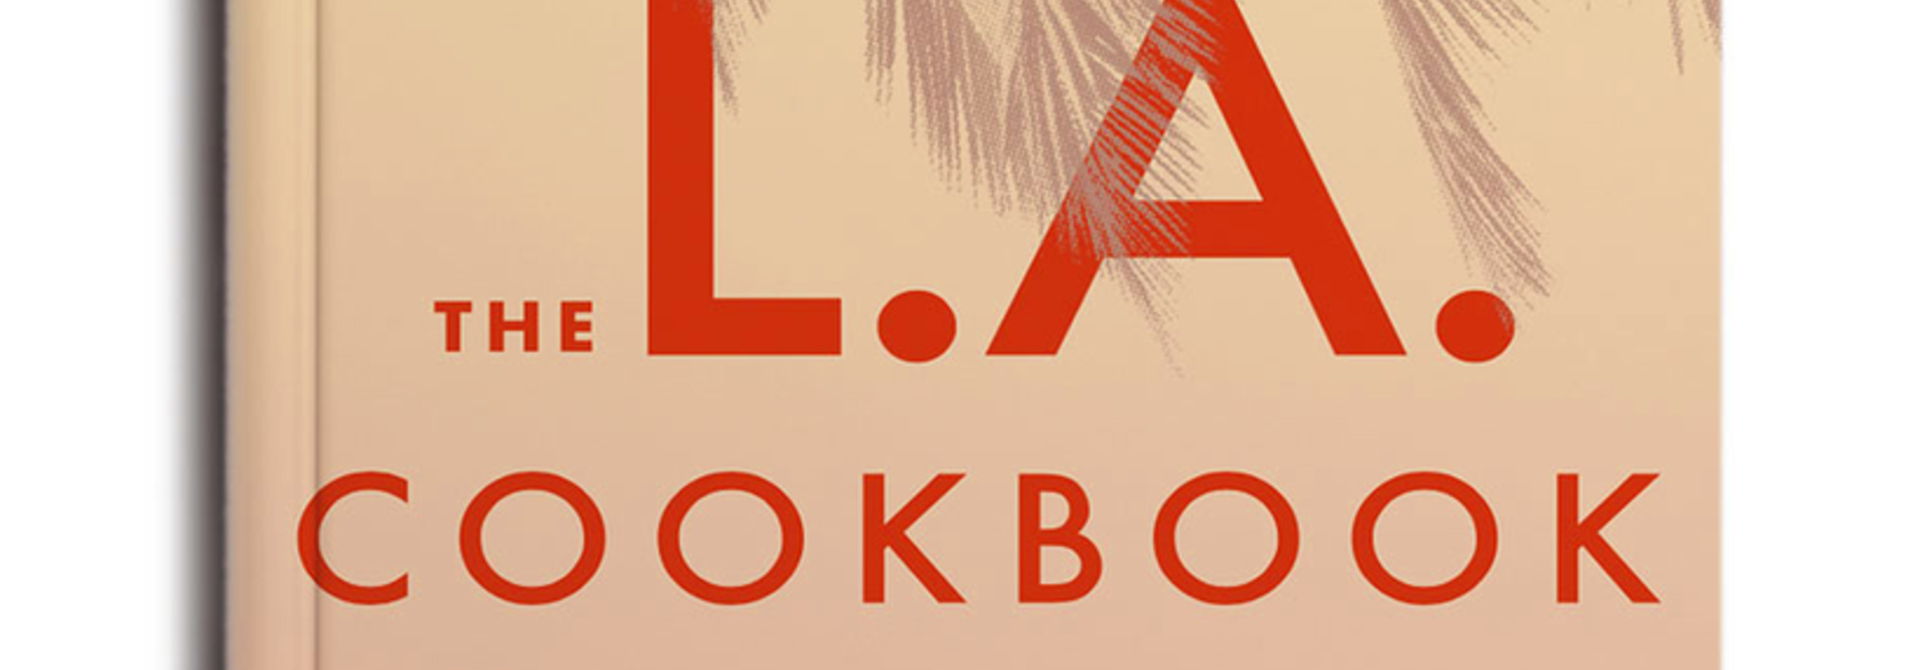 THE LA COOKBOOK